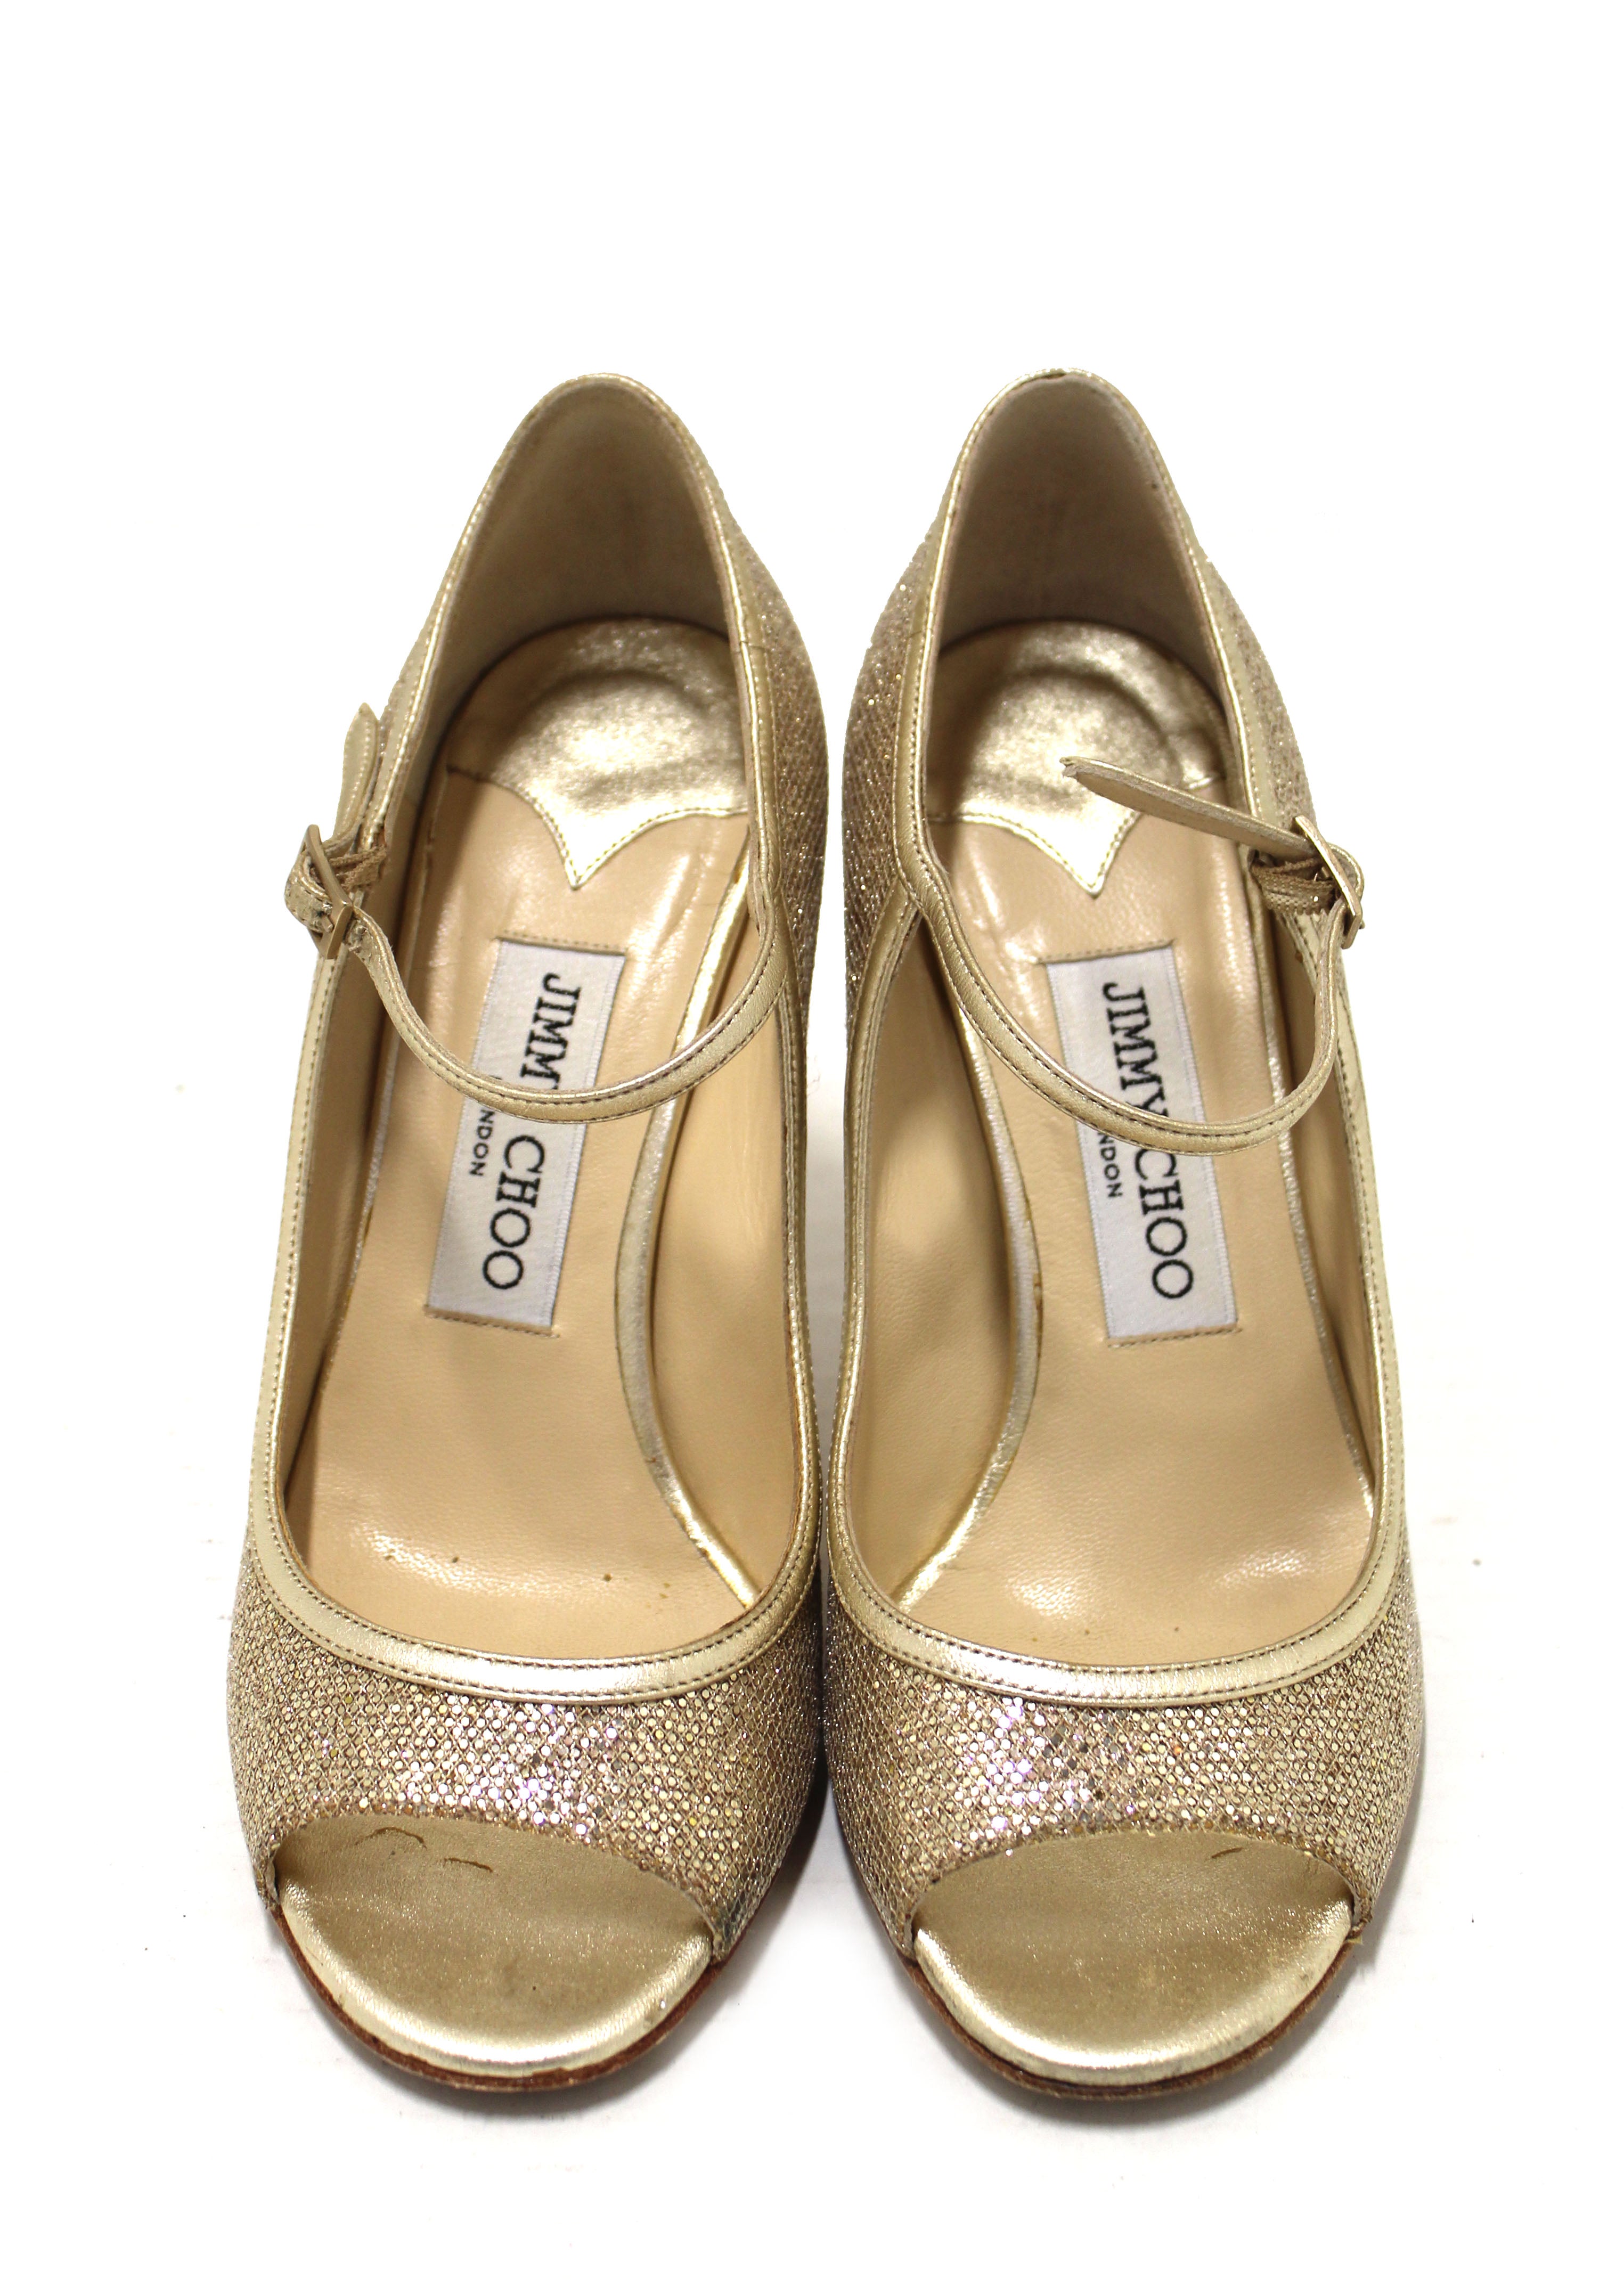 Authentic Jimmy Choo Champagne Gold Glitter Fabric Pump Heel Sandal Size 36.5